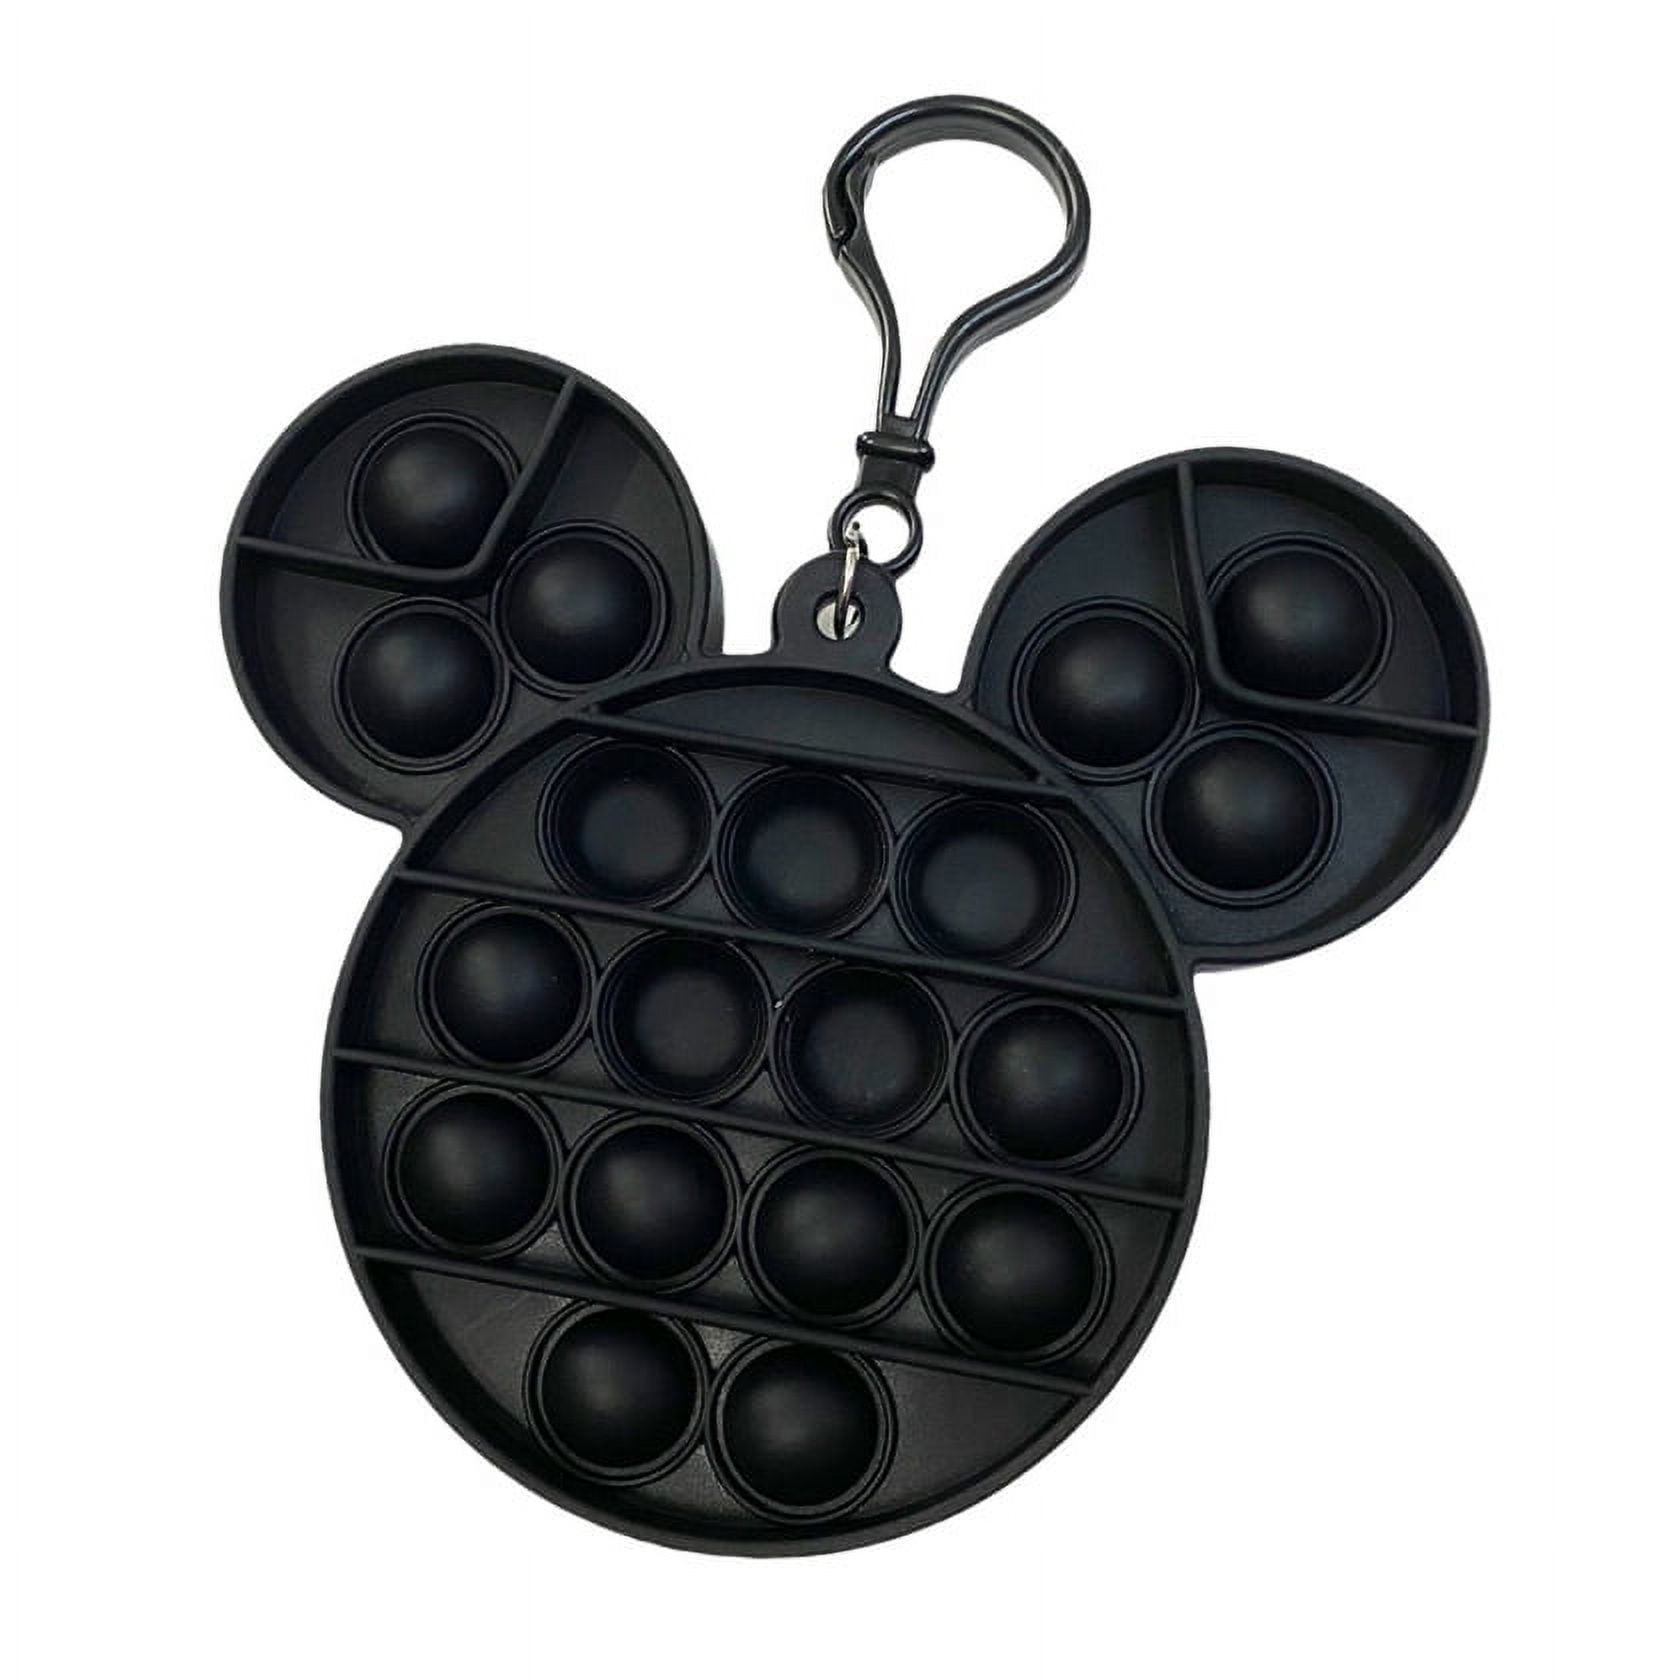 Mickey Mouse Head Shaped Pop Fidget Toy Keychain